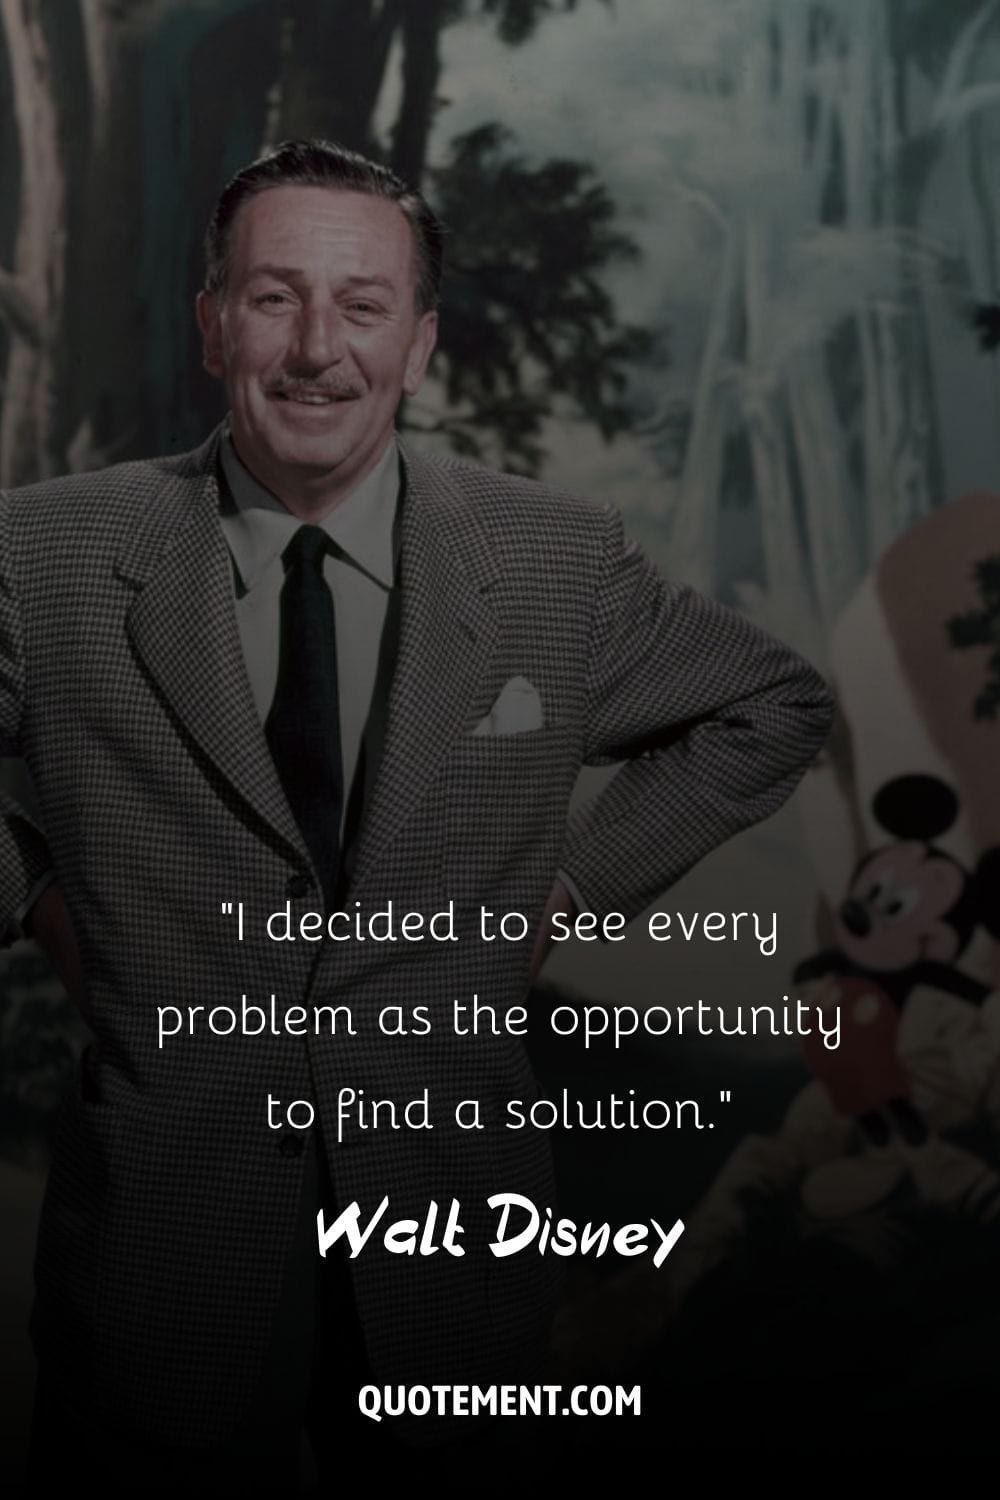 Creative spirit shines as Walt Disney strikes pose.